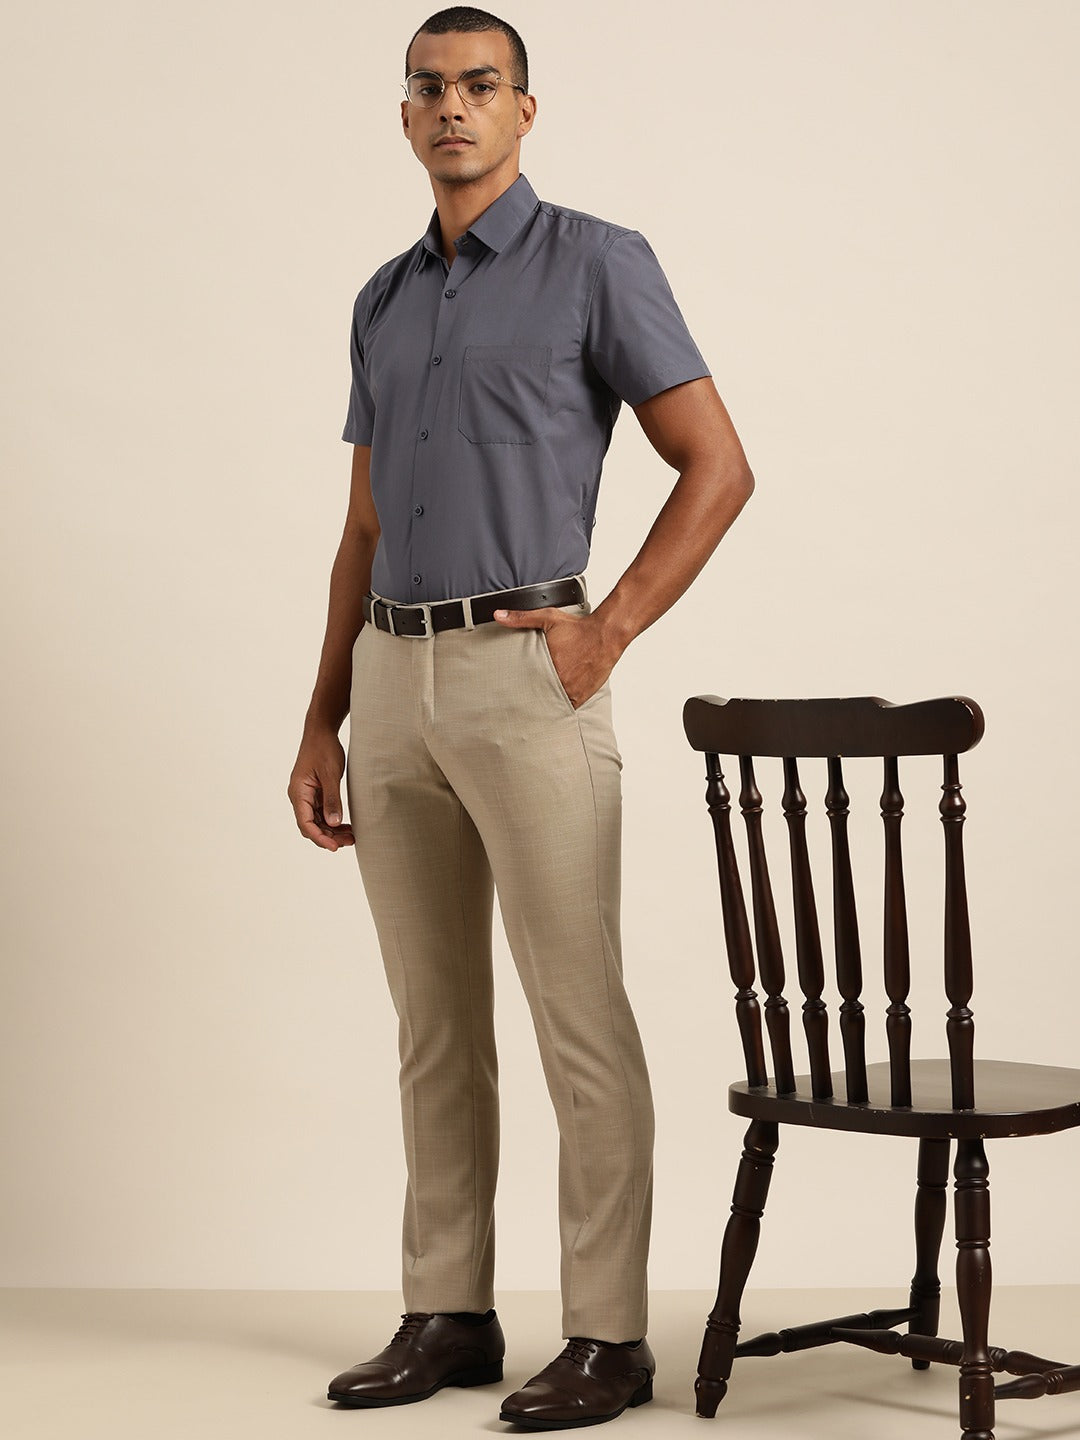 Men's Cotton Charcoal grey Classic Formal Shirt - Sojanya